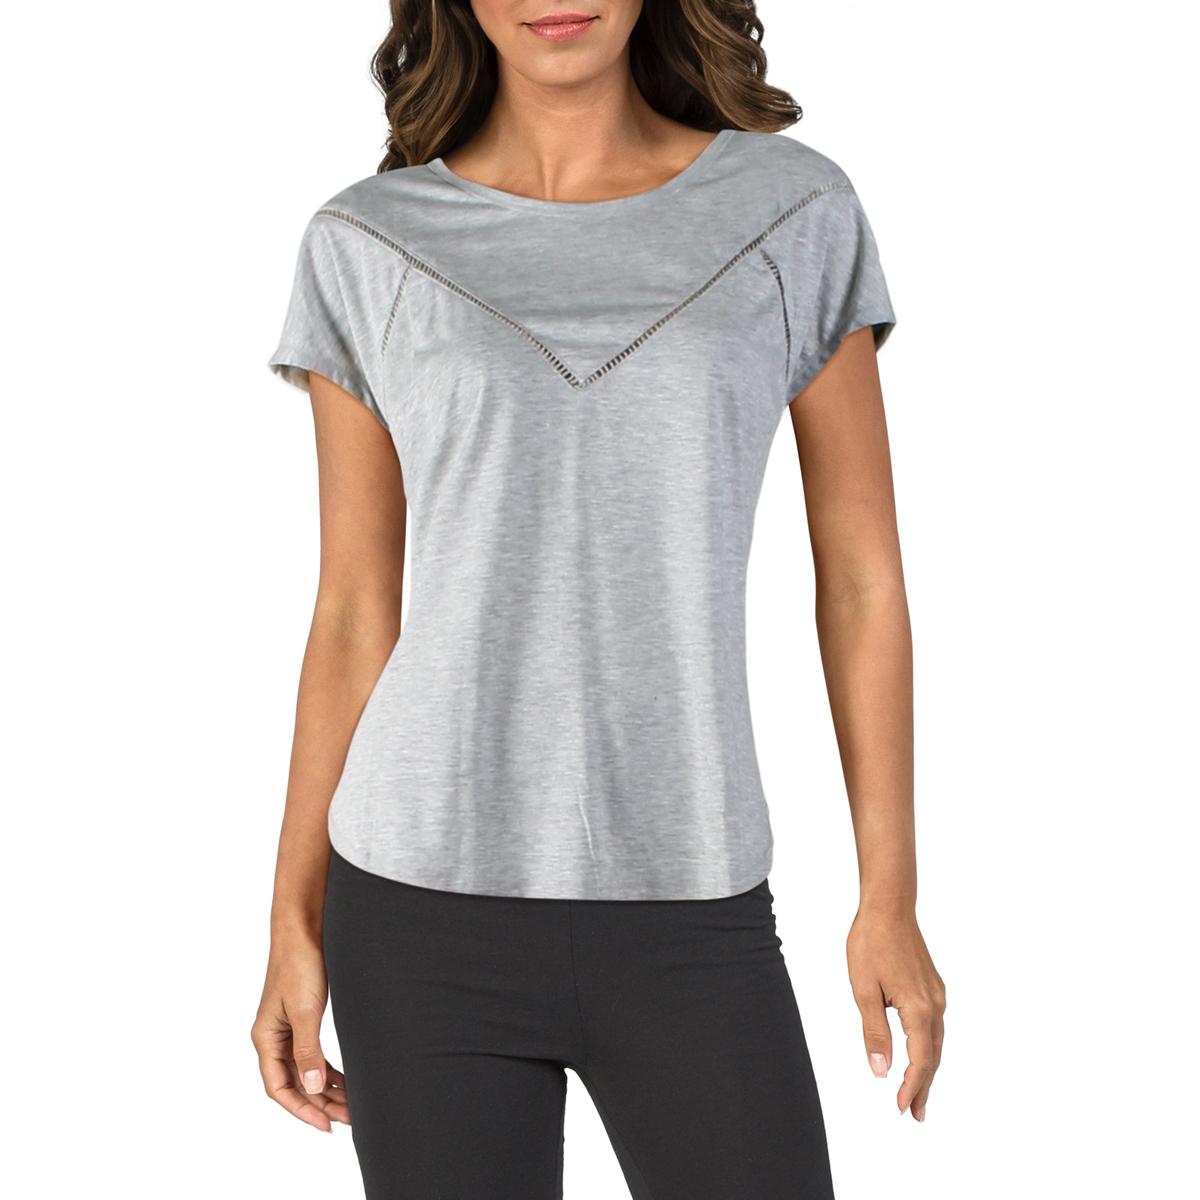 Yogalicious : Workout Tops & Workout Shirts for Women : Target